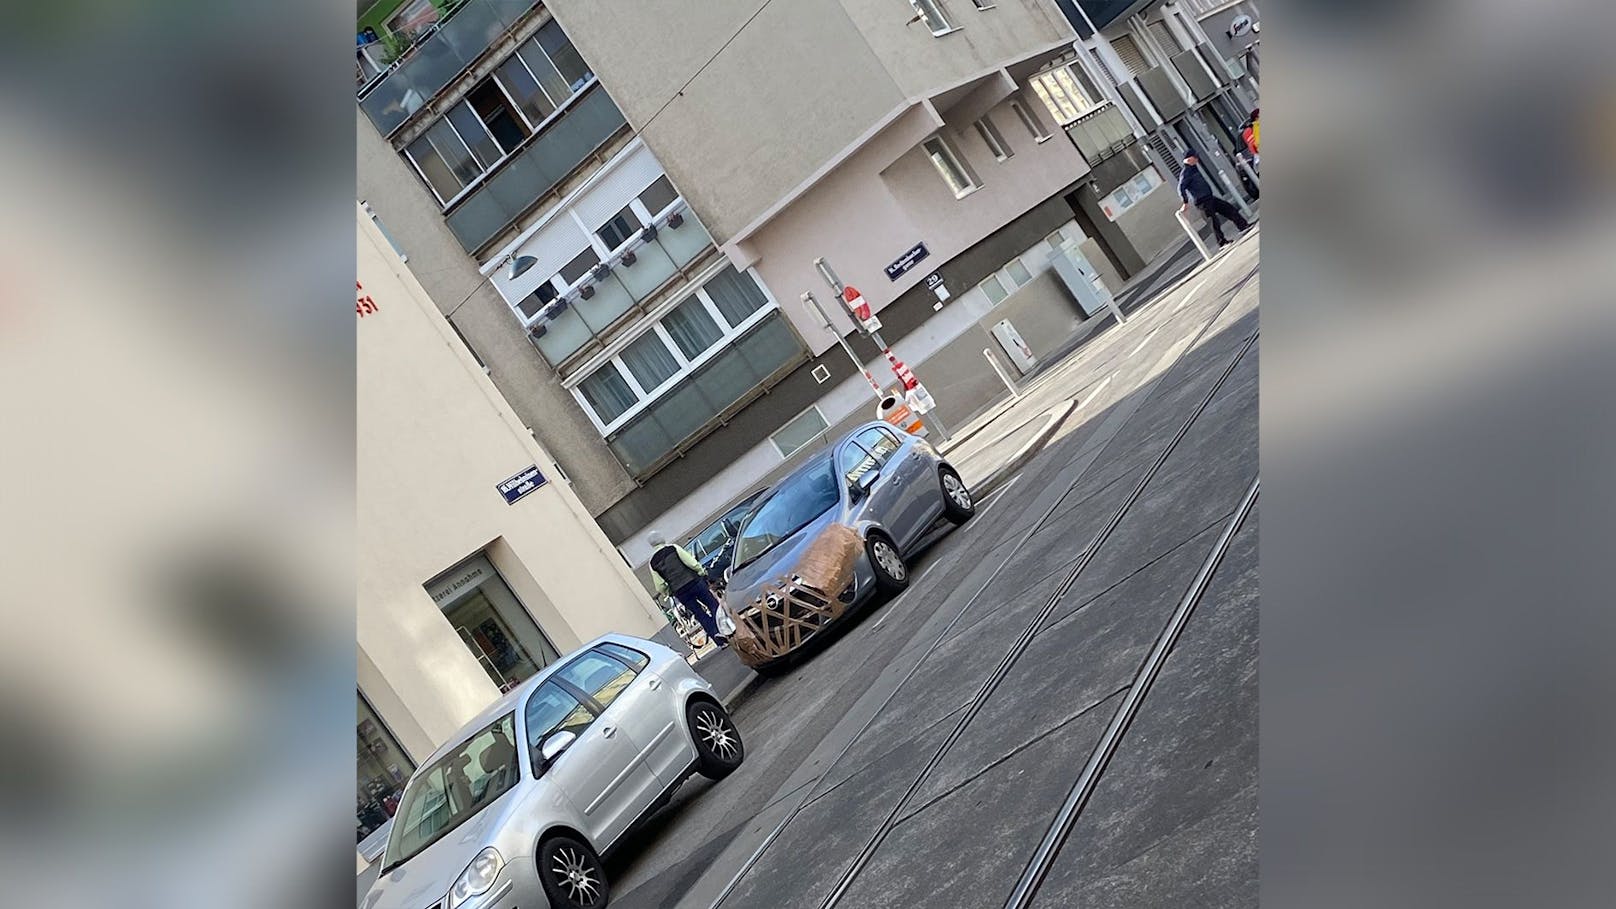 Skurrile Aktion: Wiener "repariert" Opel mit Paketband